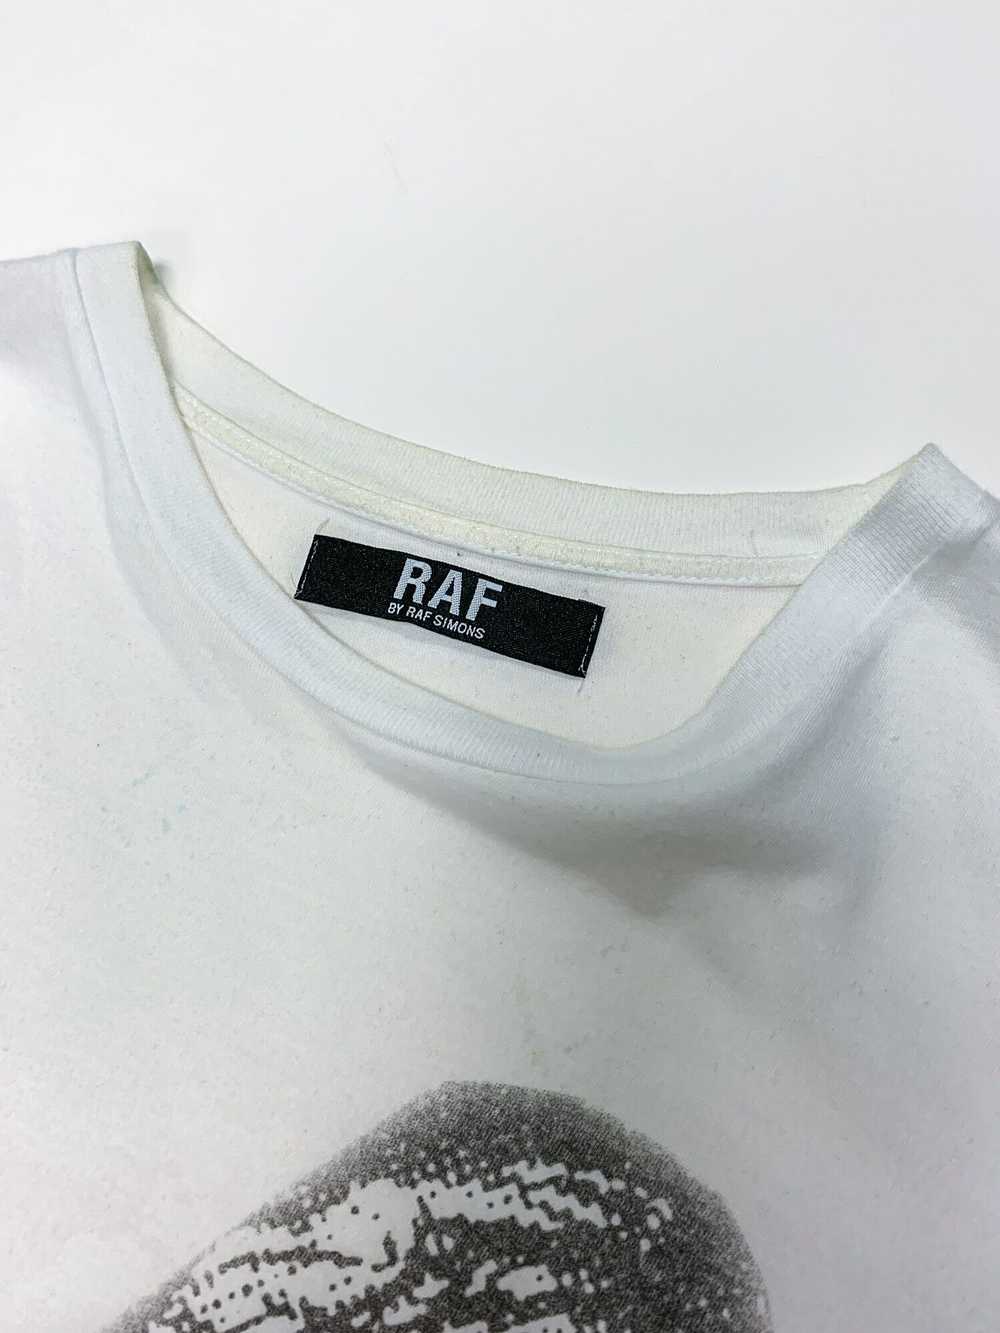 Raf by Raf Simons Cutoff Print T-Shirt "Yesterday" - image 4